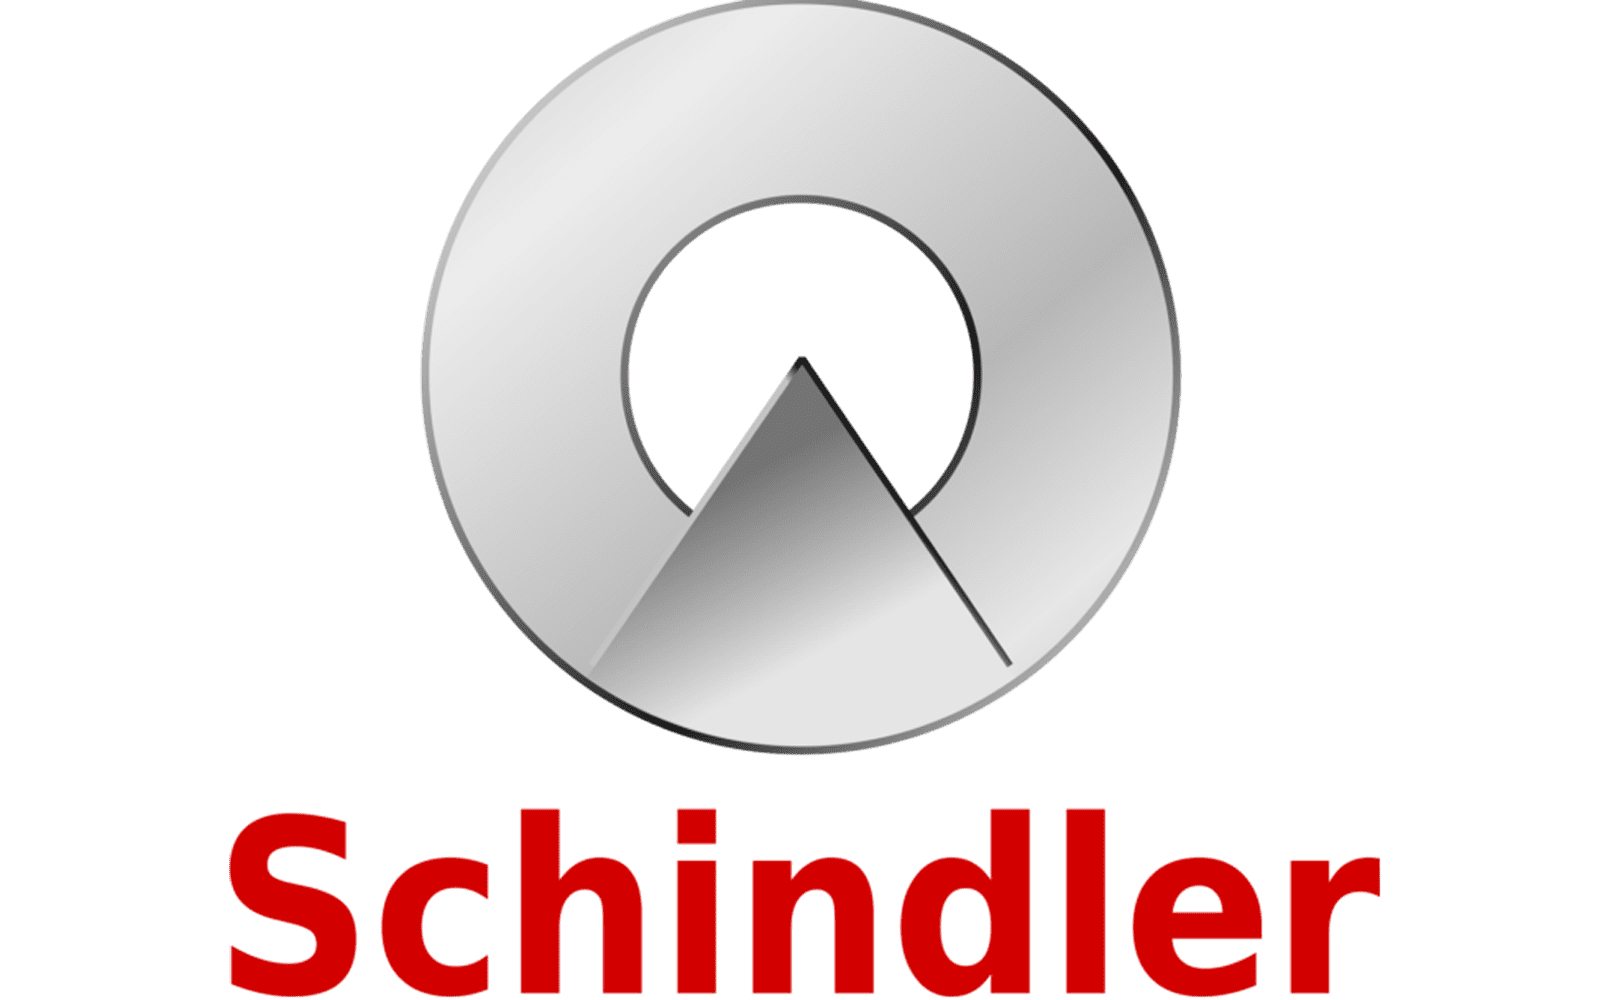 Schindler escalator